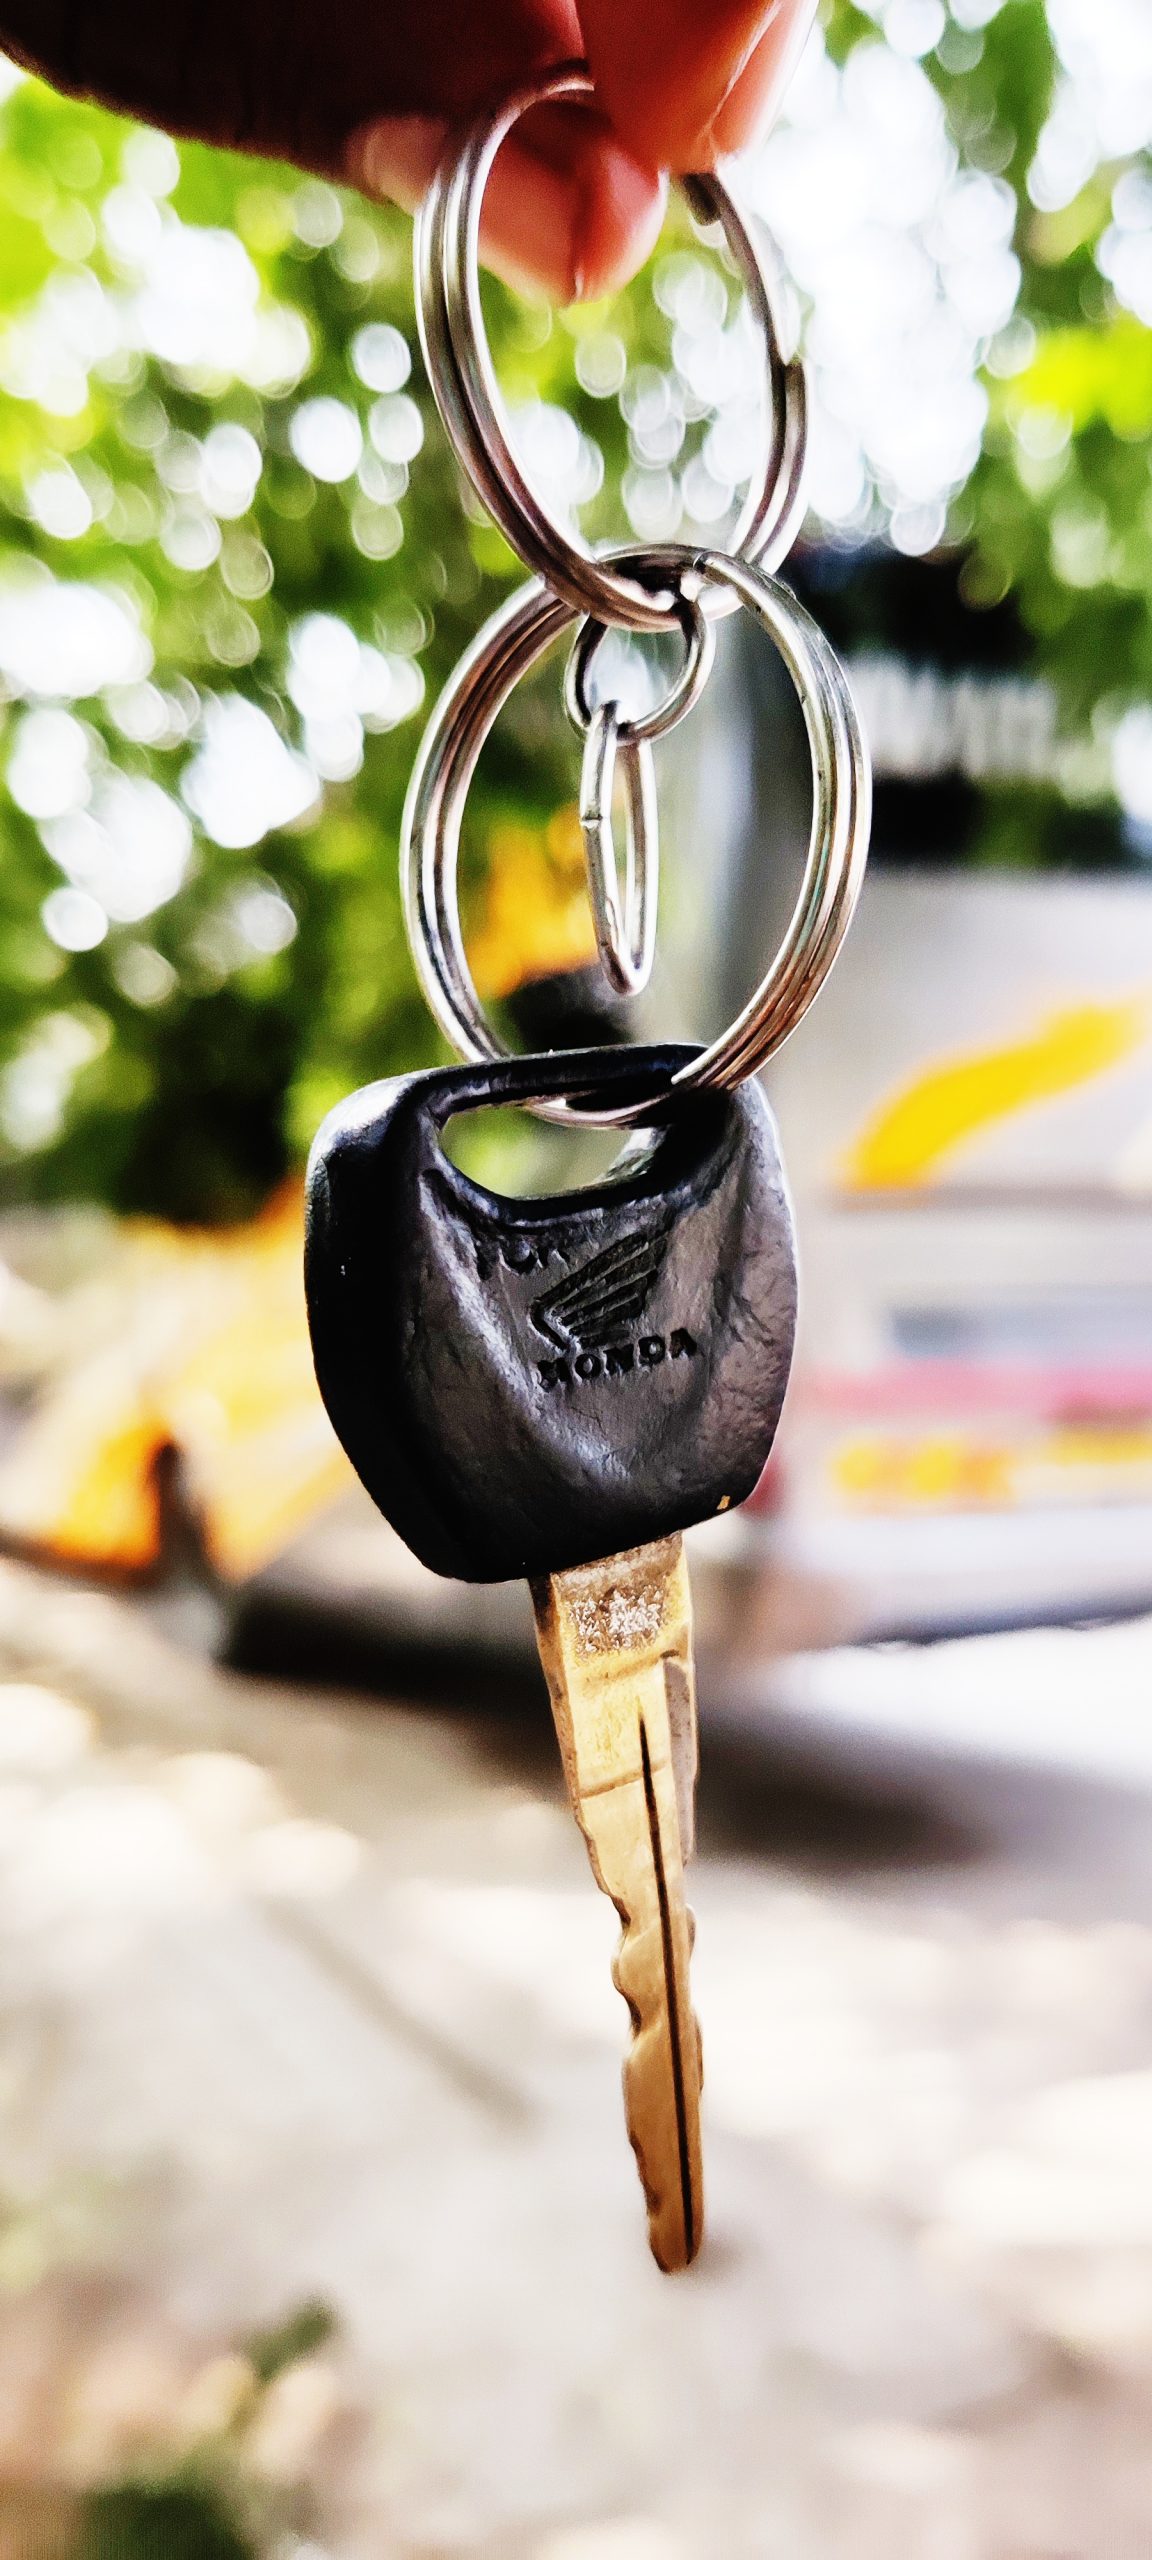 A vehicle key